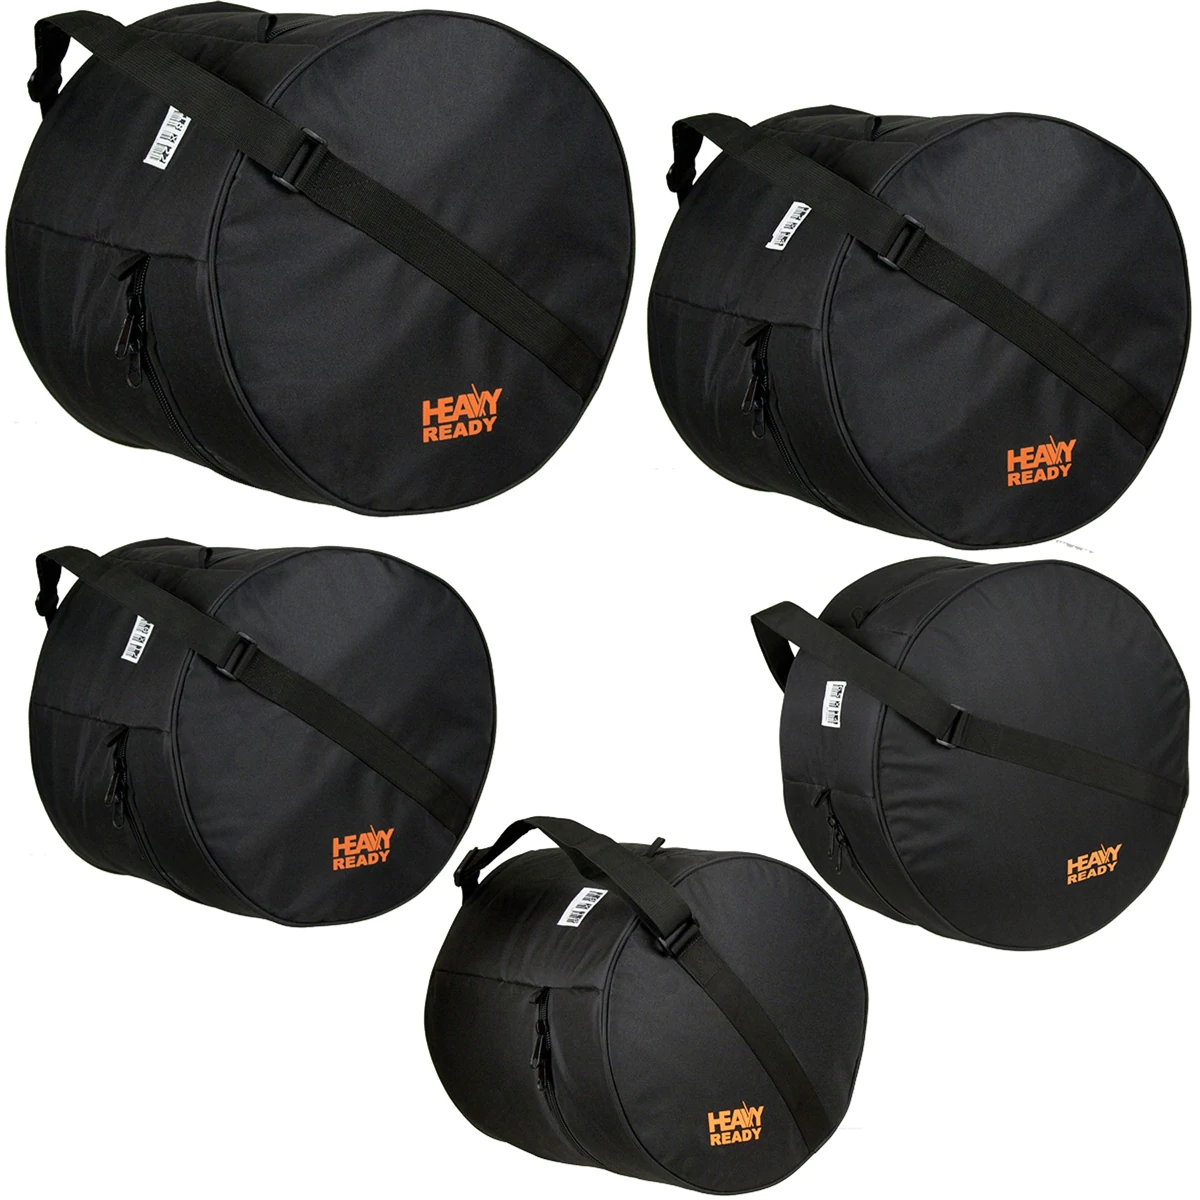 PROTEC Heavy Ready 5pc Bag Kit - Standard 1